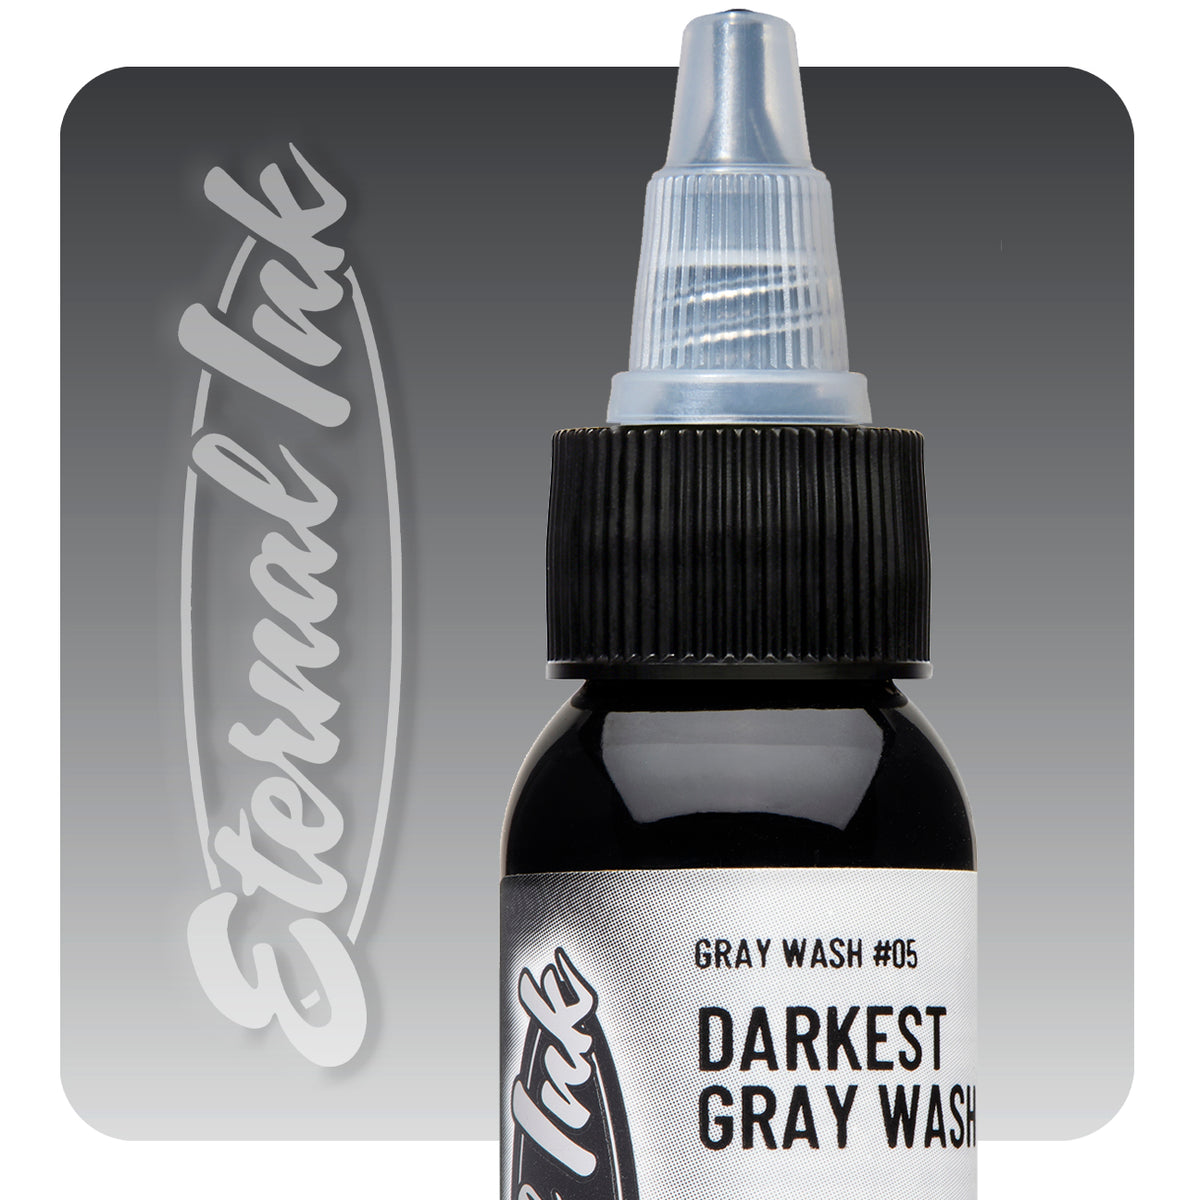 Eternal Ink Gray Wash Set